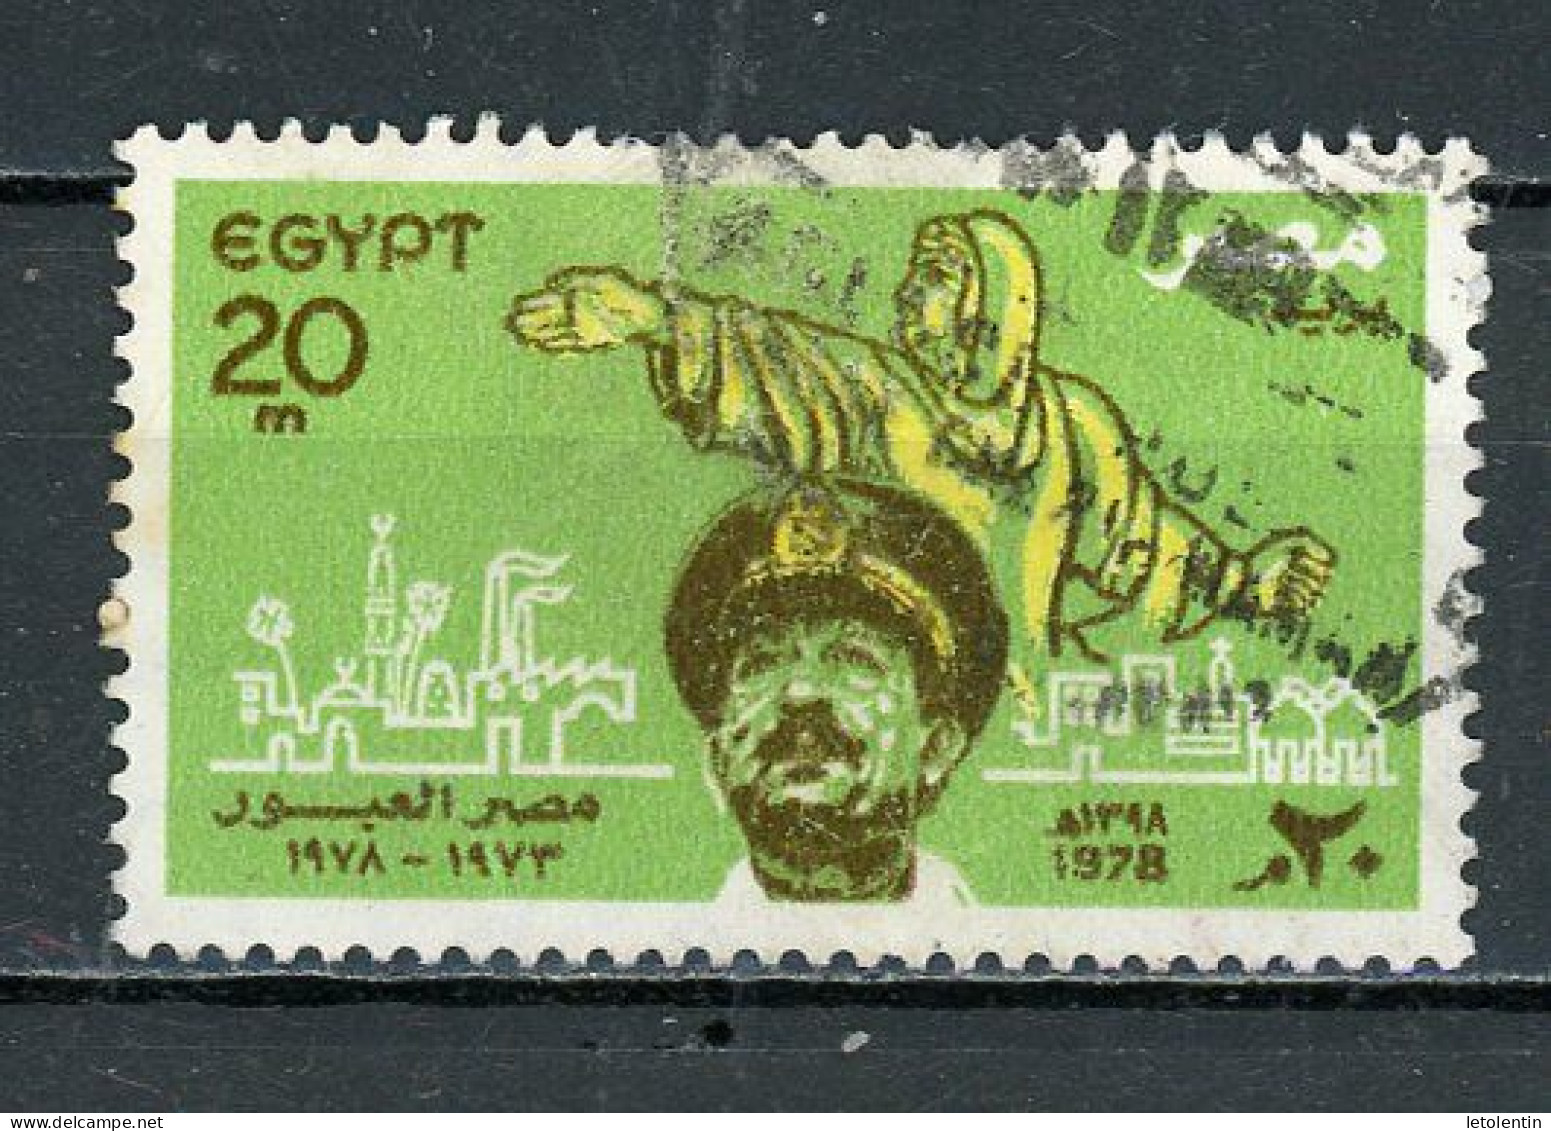 EGYPTE: CANAL DE SUEZ - N° Yt 1065 Obli. - Used Stamps